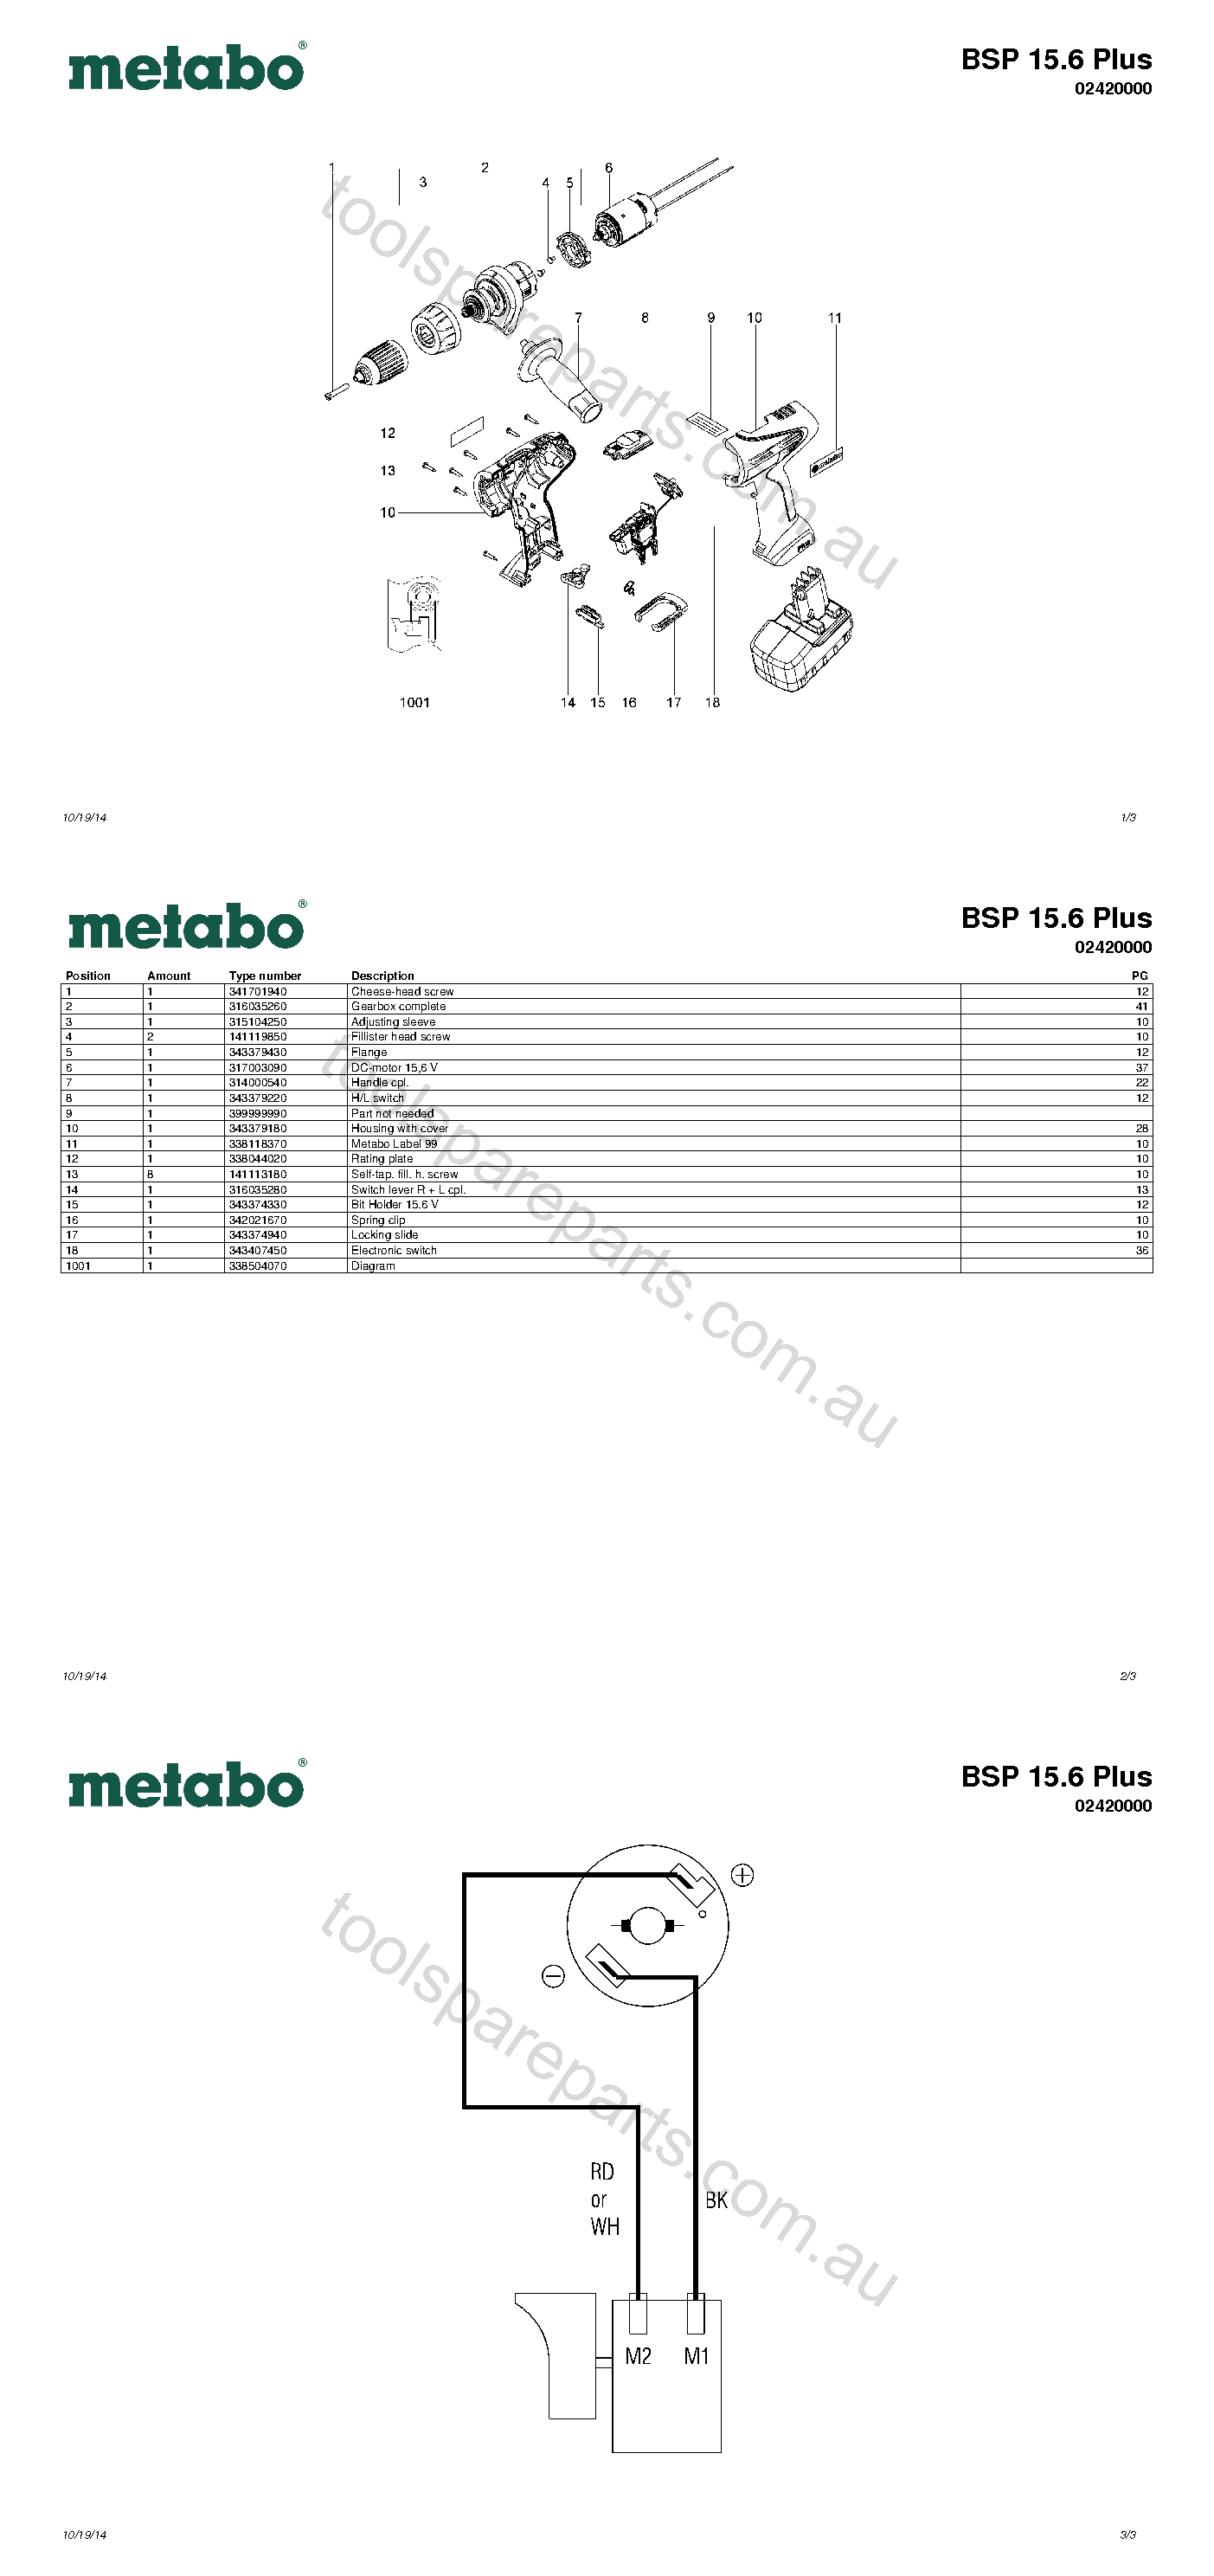 Metabo BSP 15.6 Plus 02420000  Diagram 1